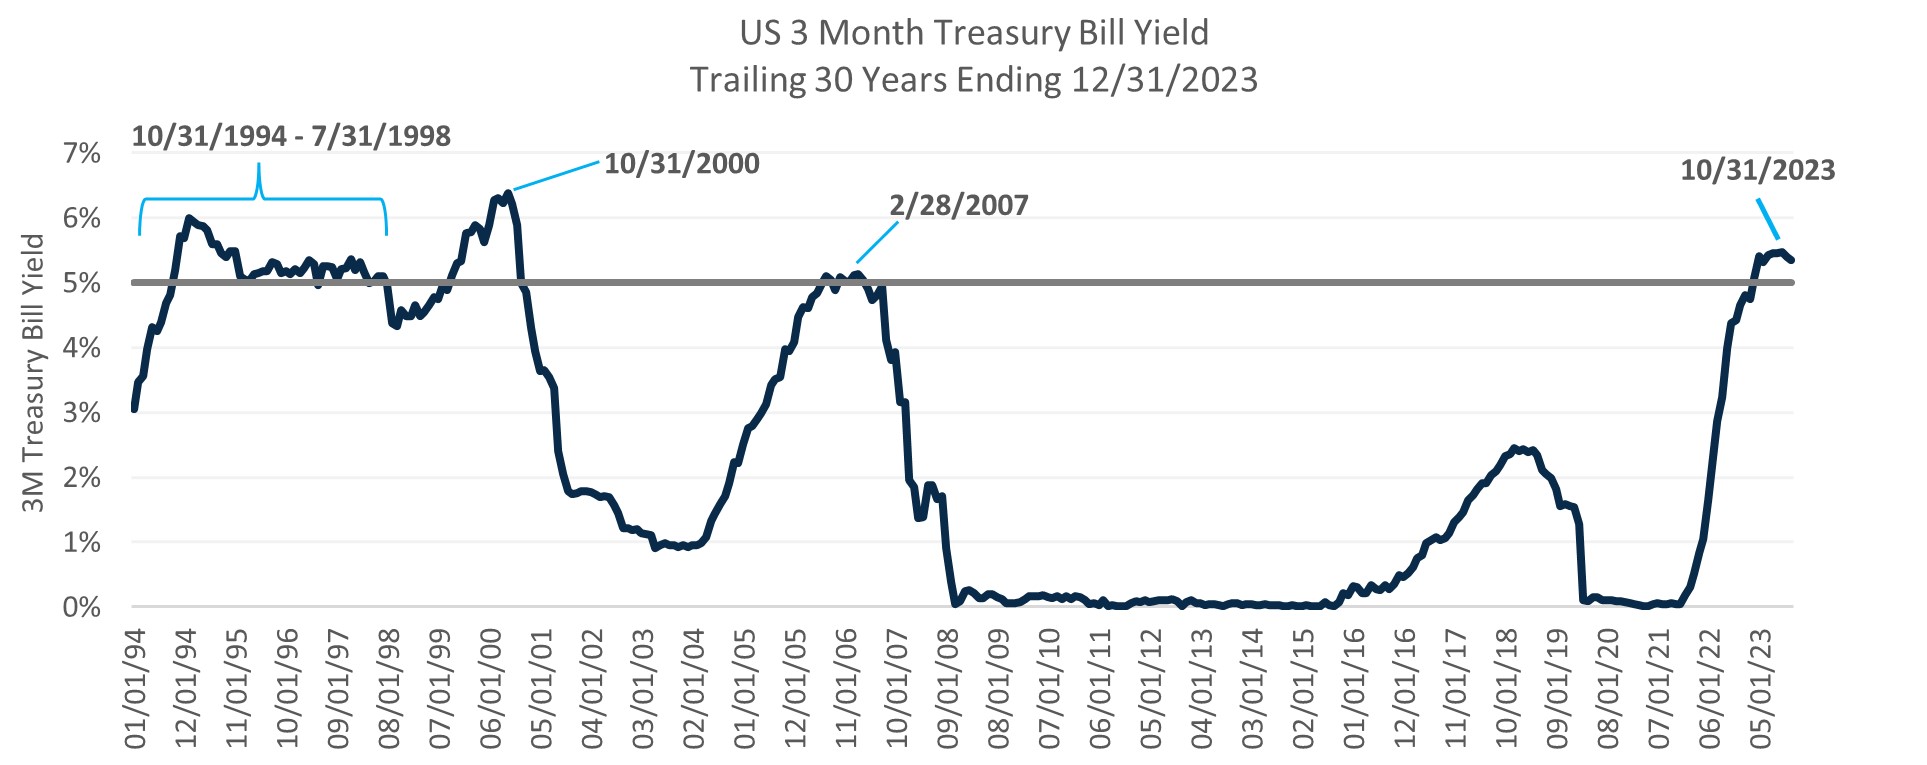 US 3 Month Treasury Bill Yield Trailing 30 Years Ending 12/31/2023